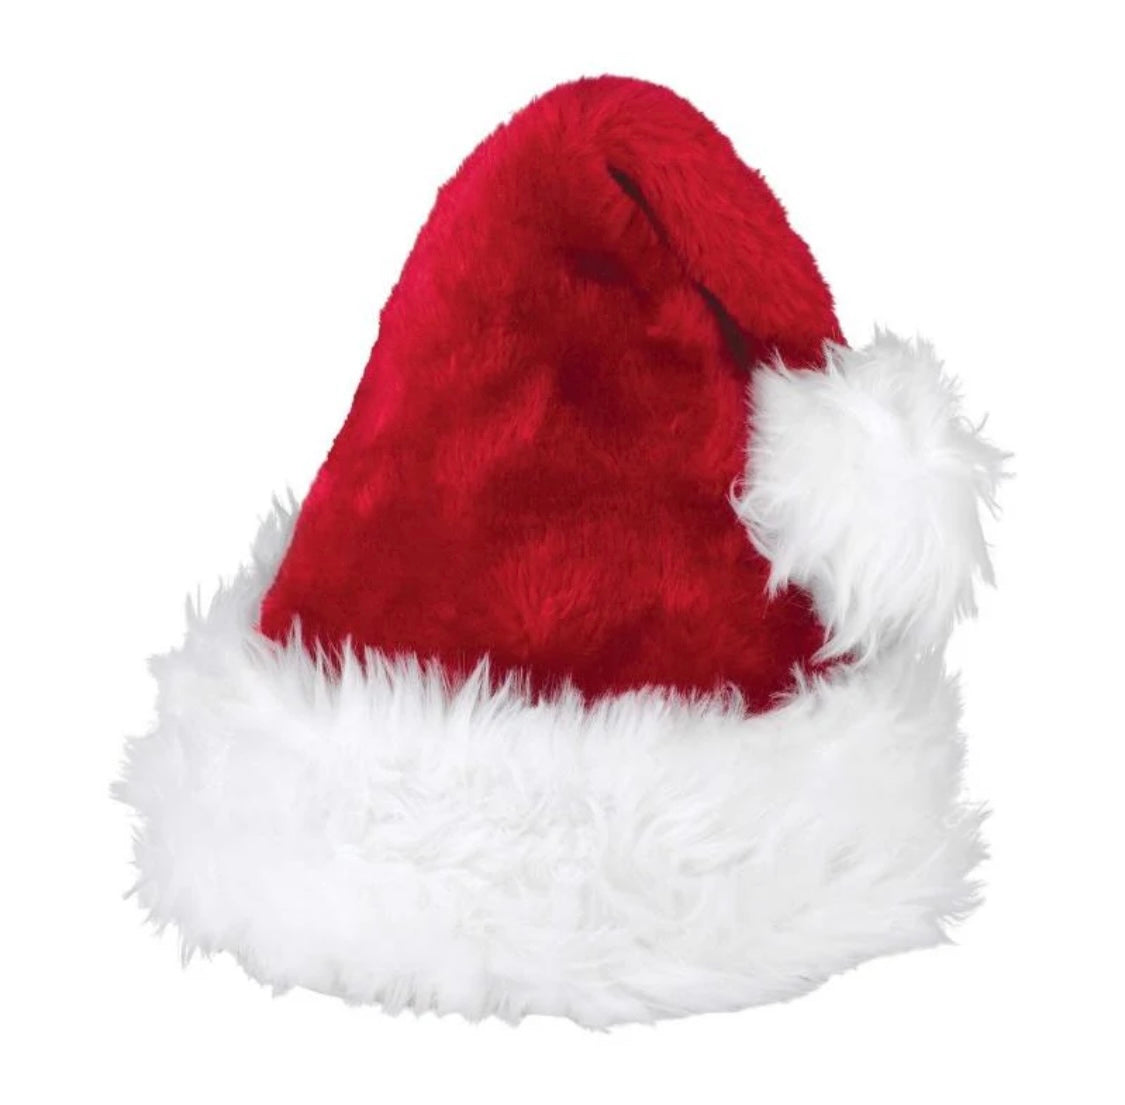 Plush Santa Hat with Fur Cuff and Pom Pom